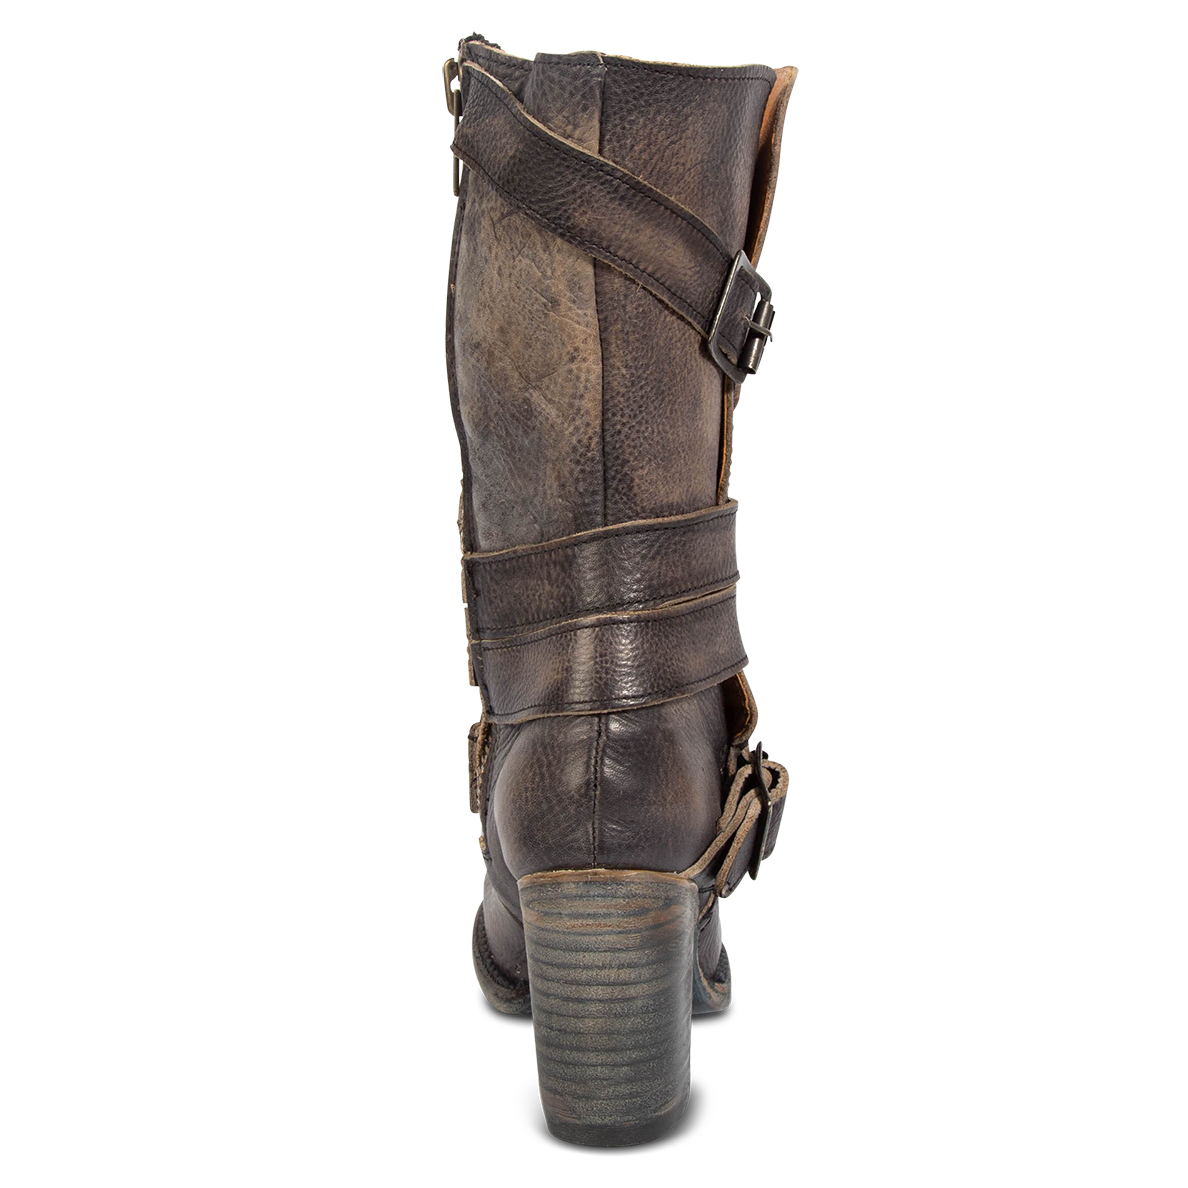 Back view showing tall heel on FREEBIRD women's Barker black mid calf boot